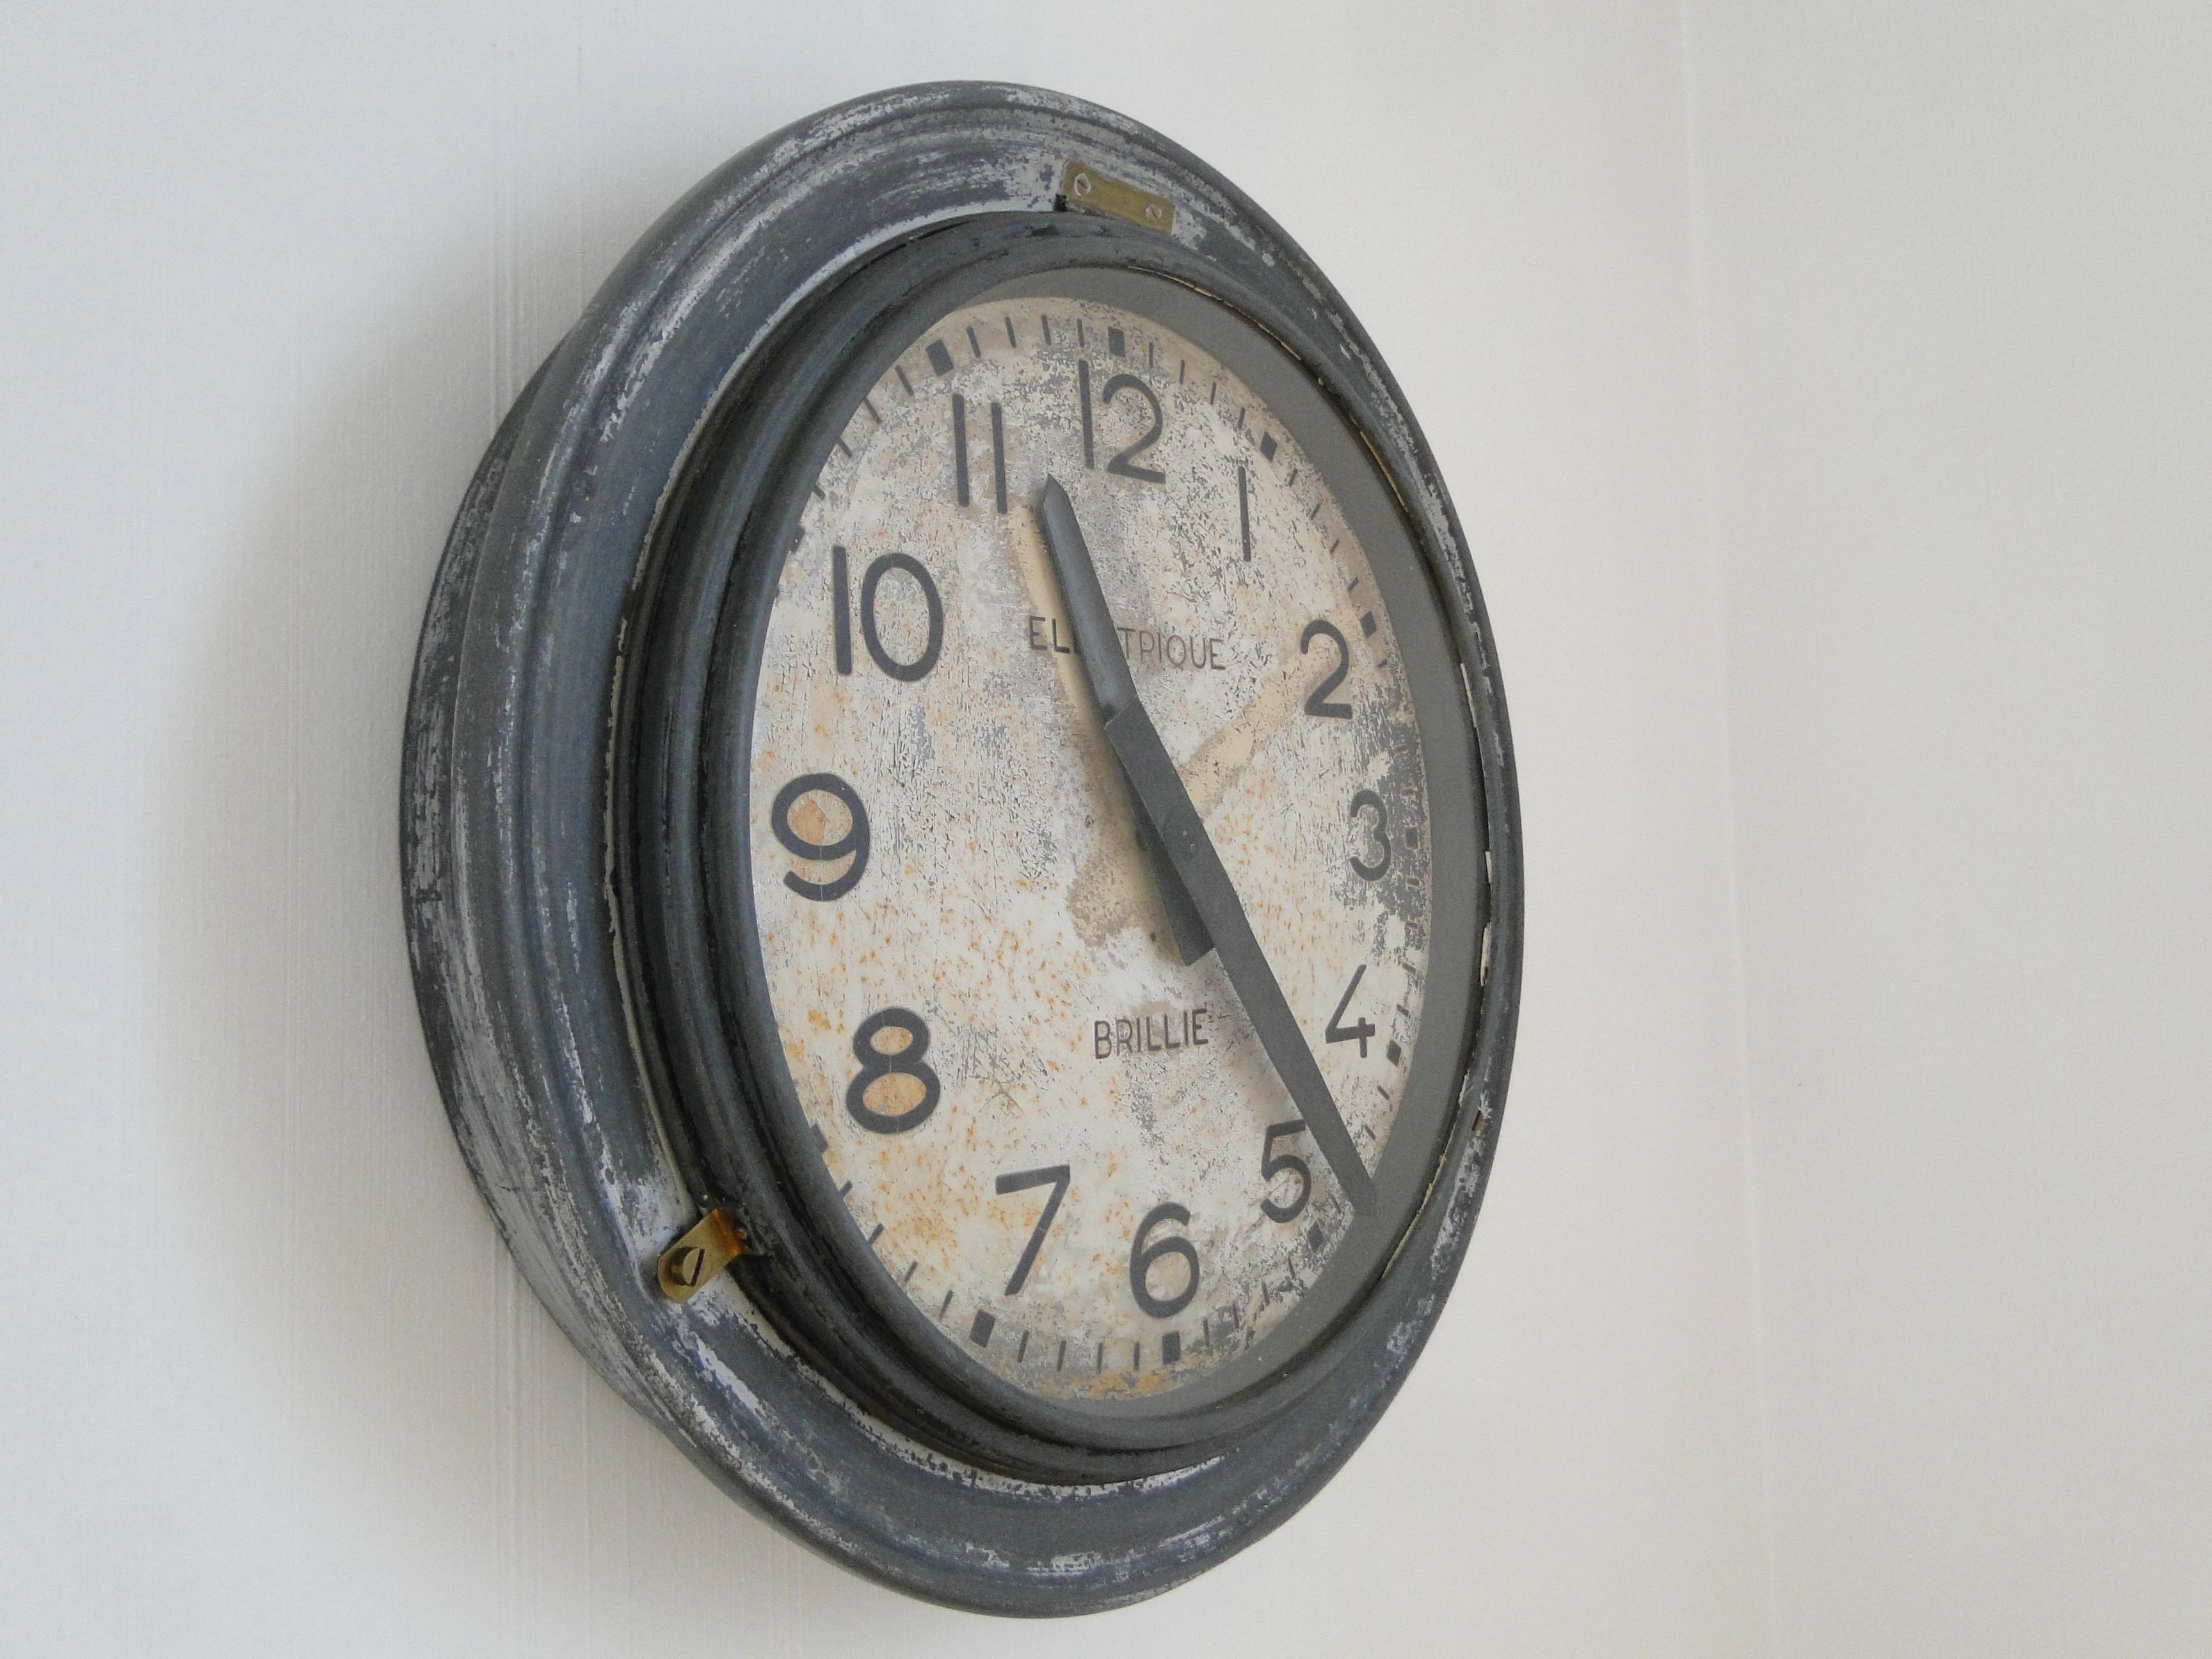 Brillie Vintage French Station Railway Clock Factory Industrial Paris France 4